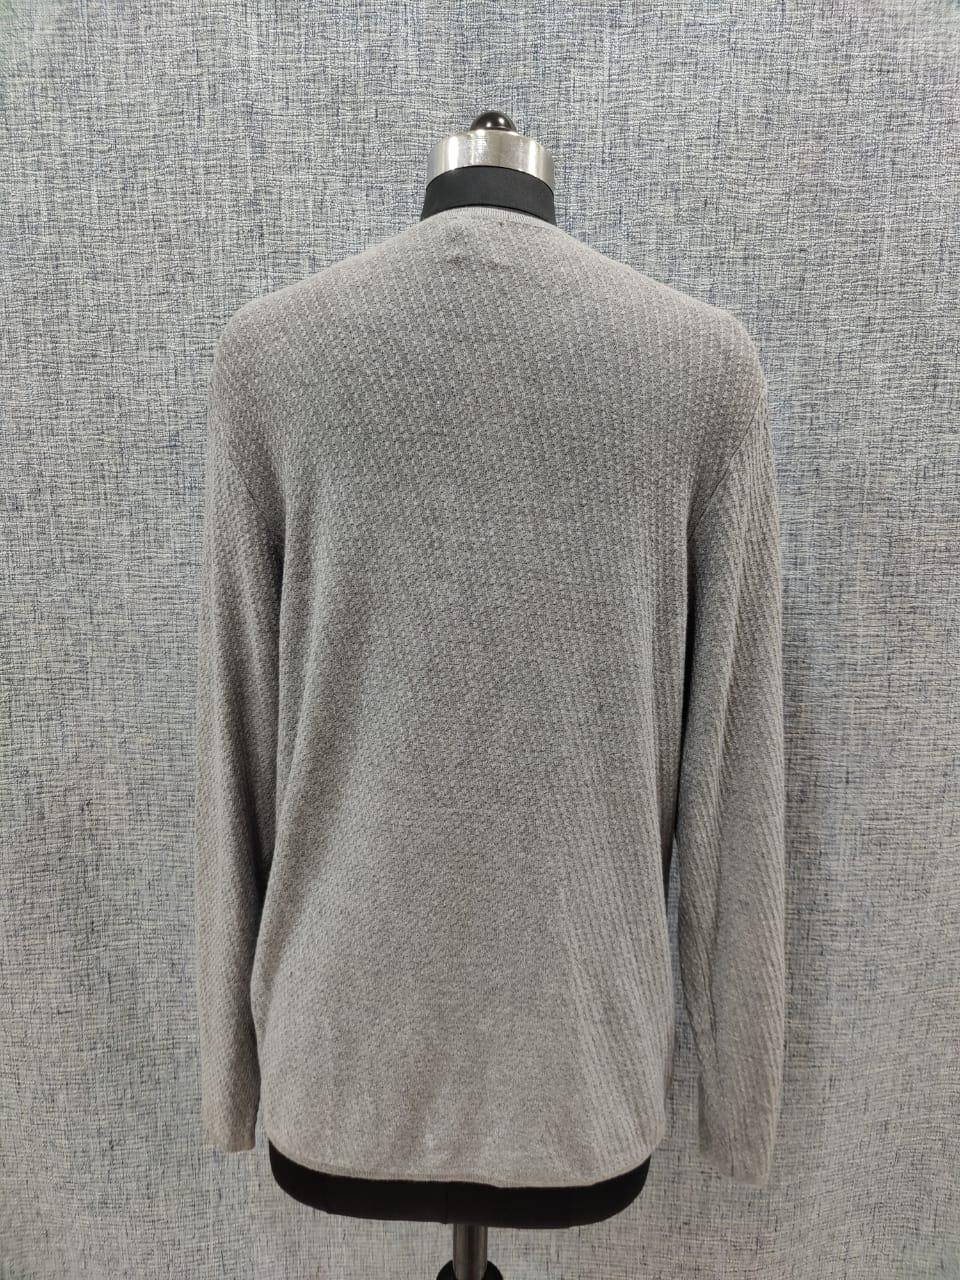 Zara Grey Knit Oversized Top | Relove